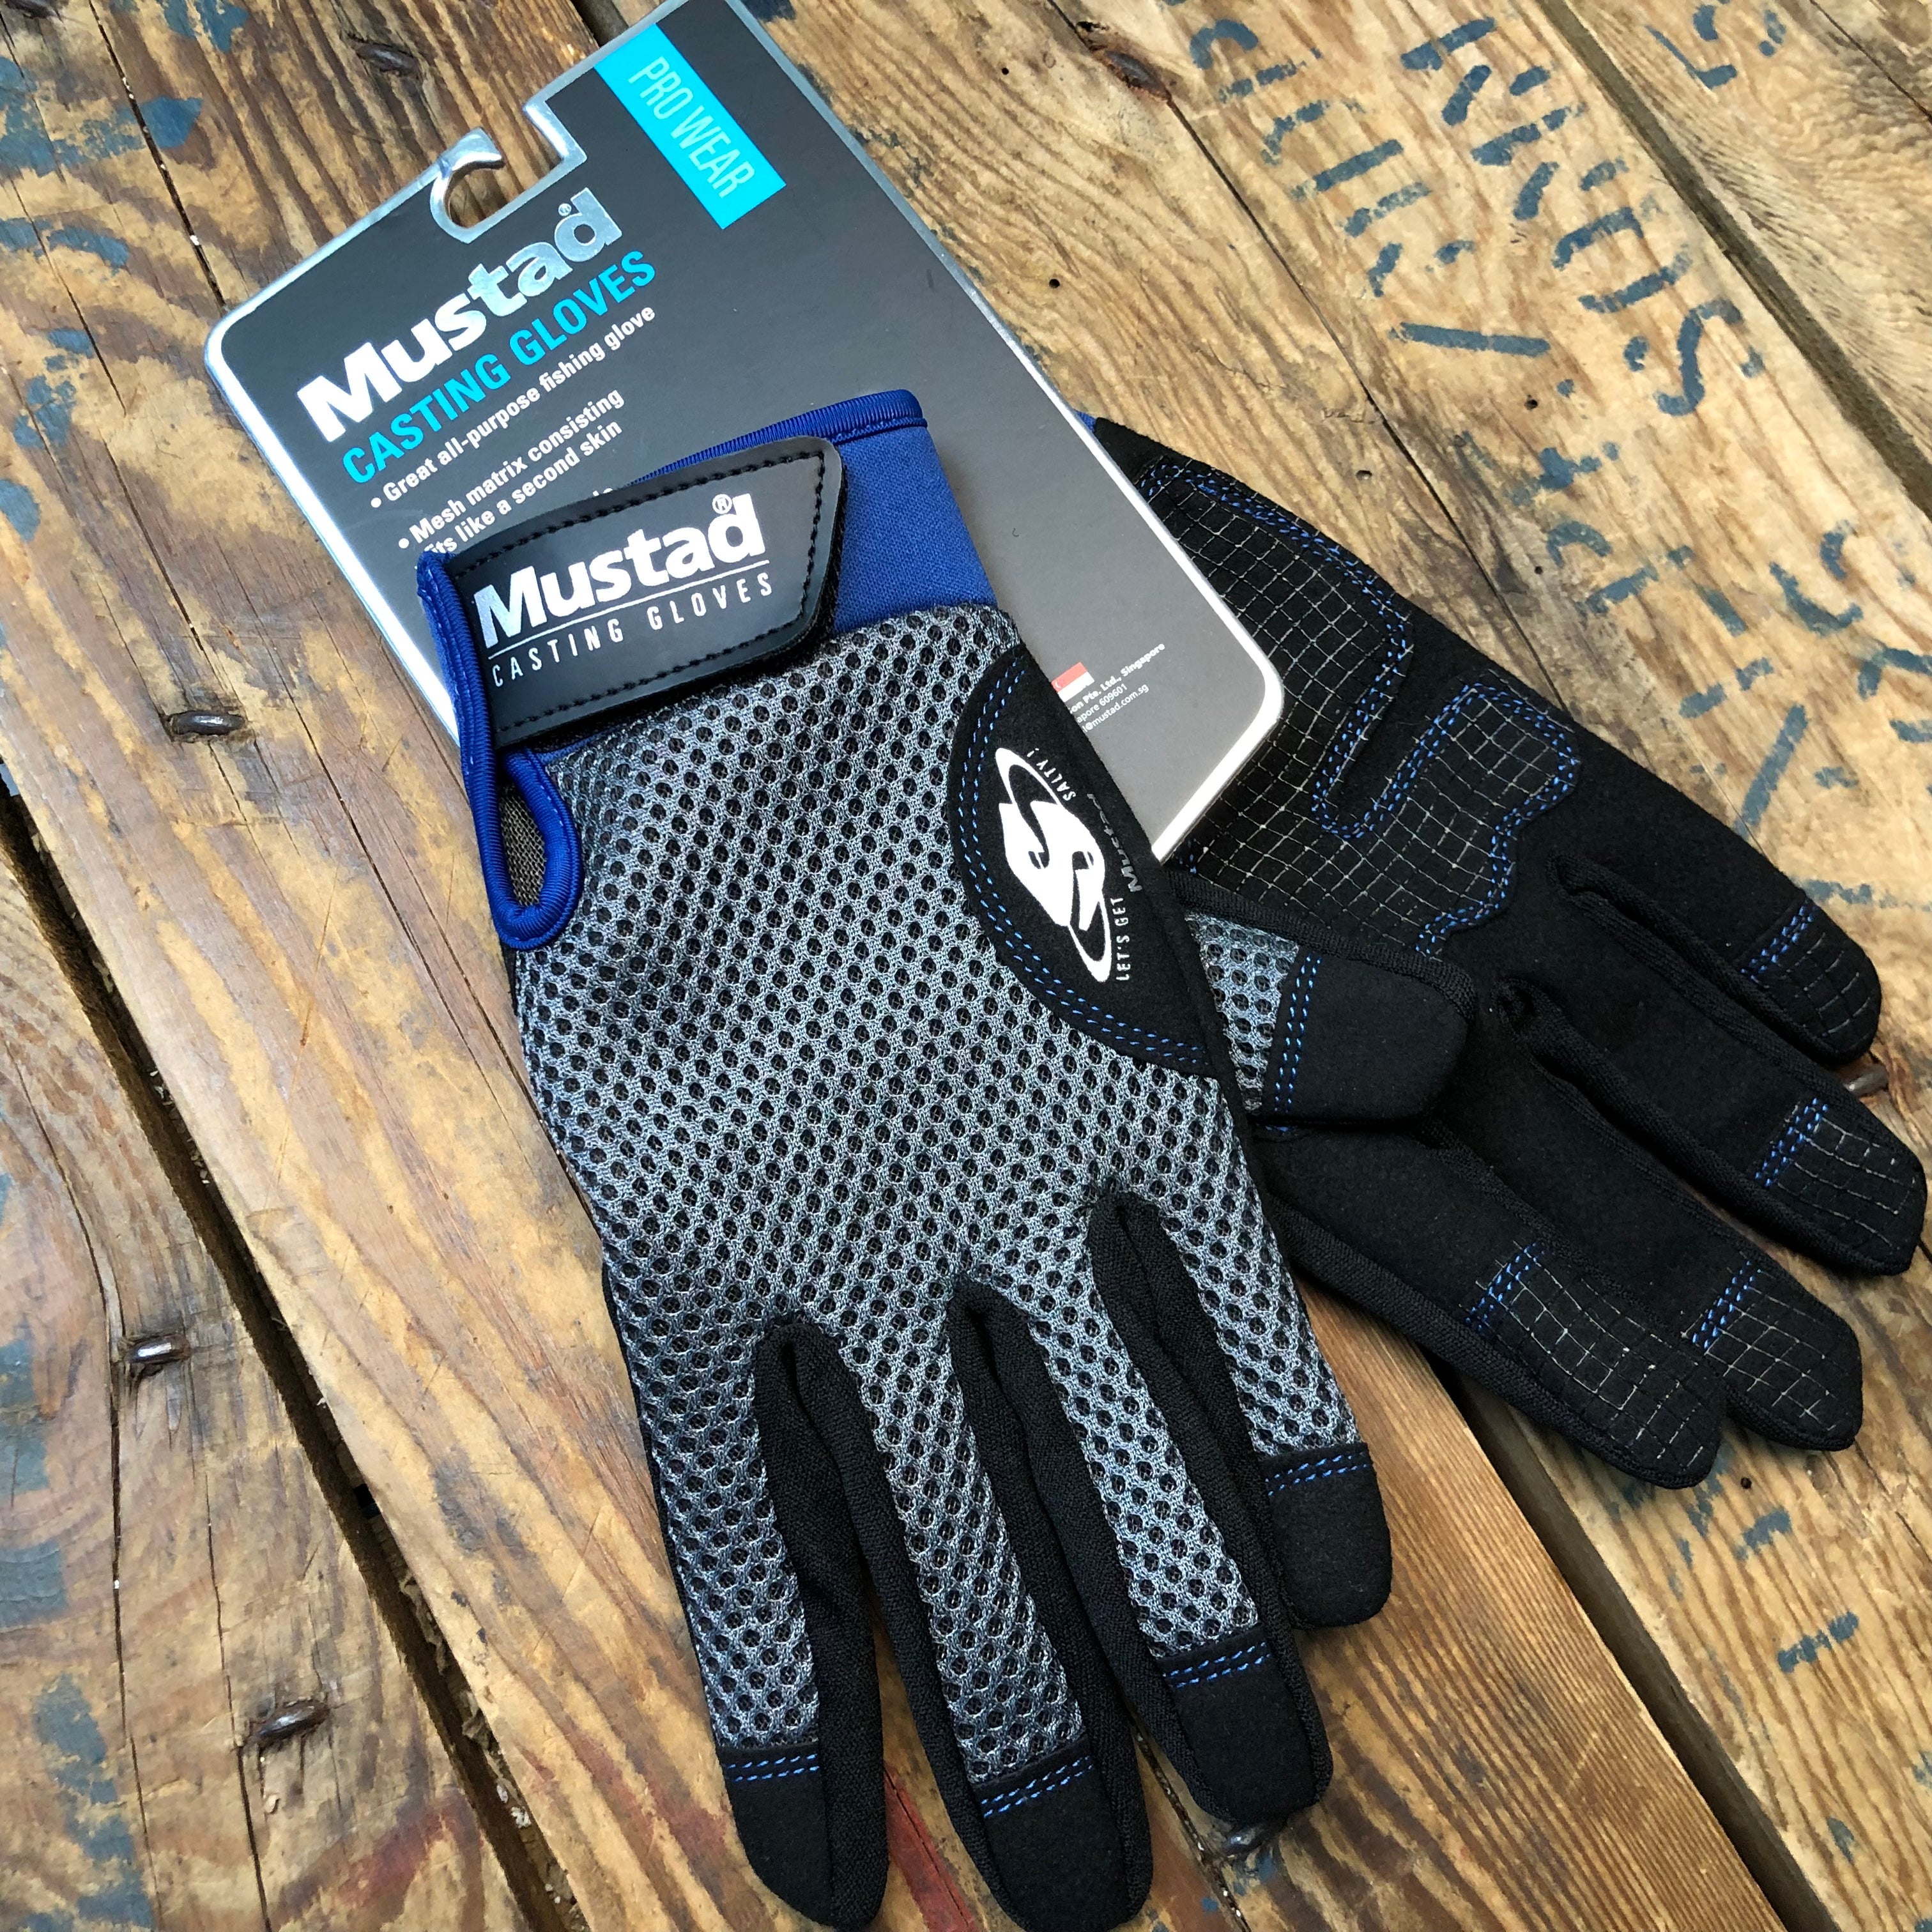 Mustad Casting Glove - General Purpose Fishing Glove